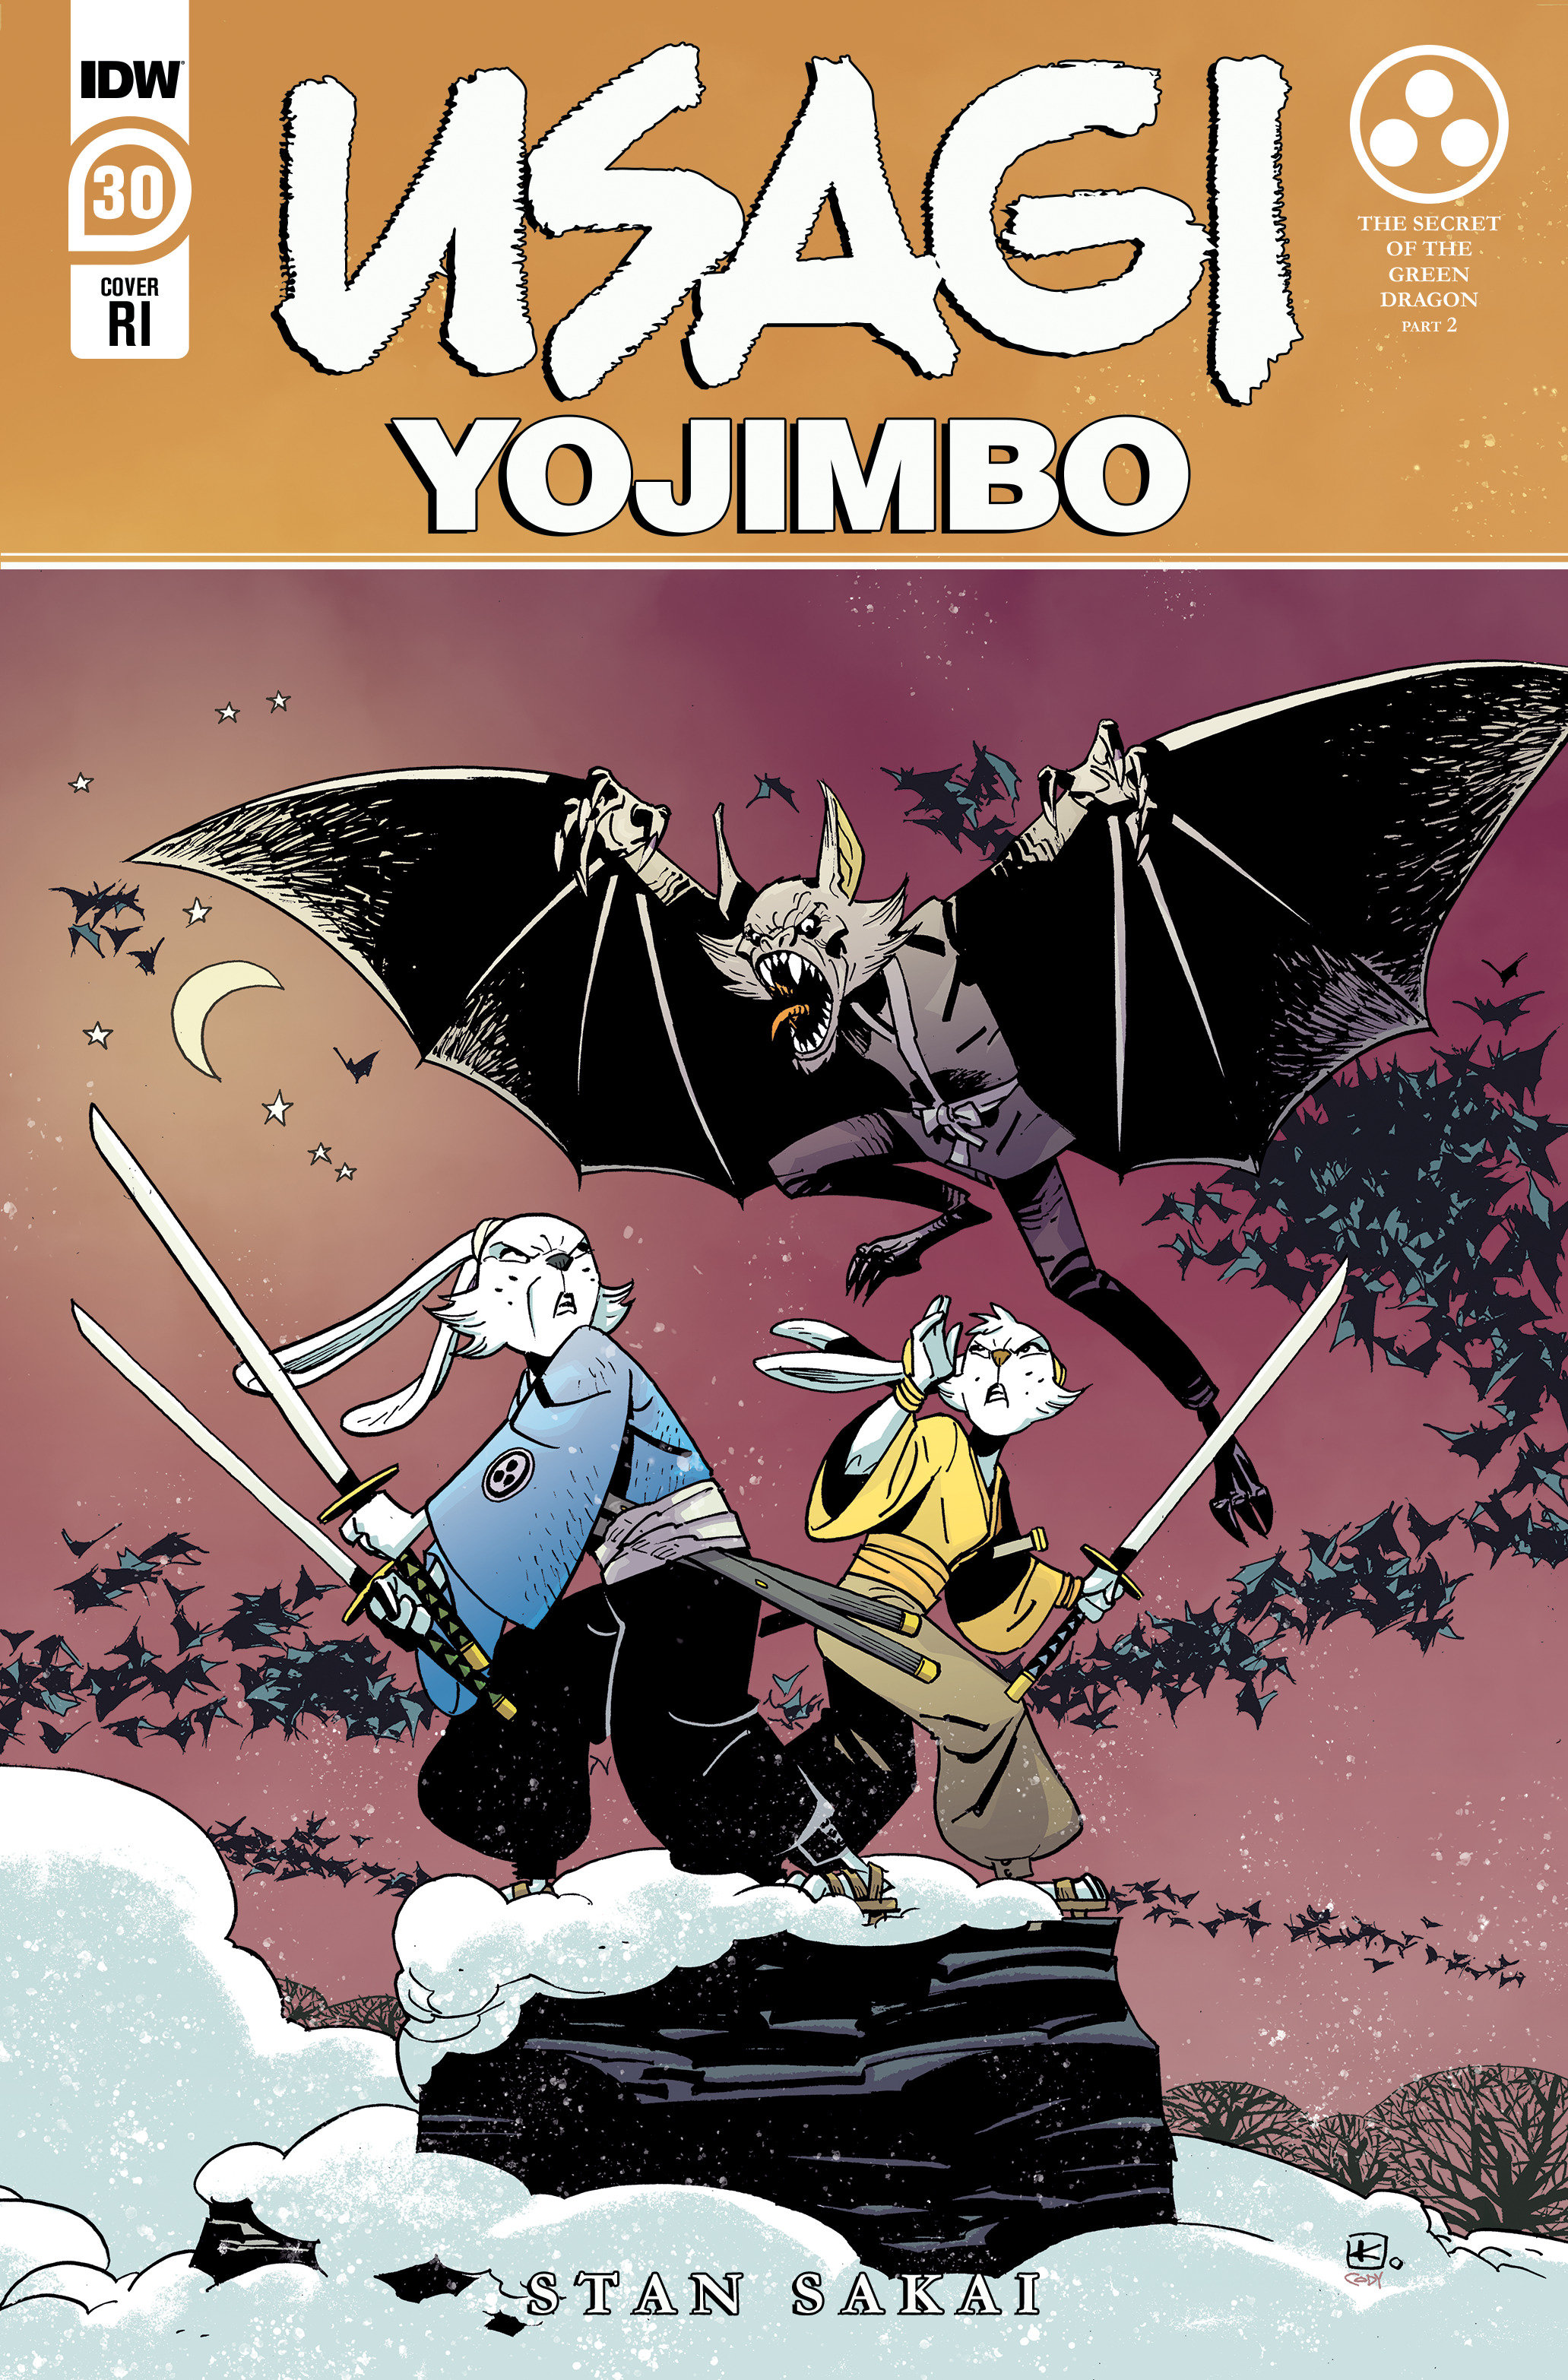 Usagi Yojimbo #30 Cover B 1 for 10 Incentive (2019)